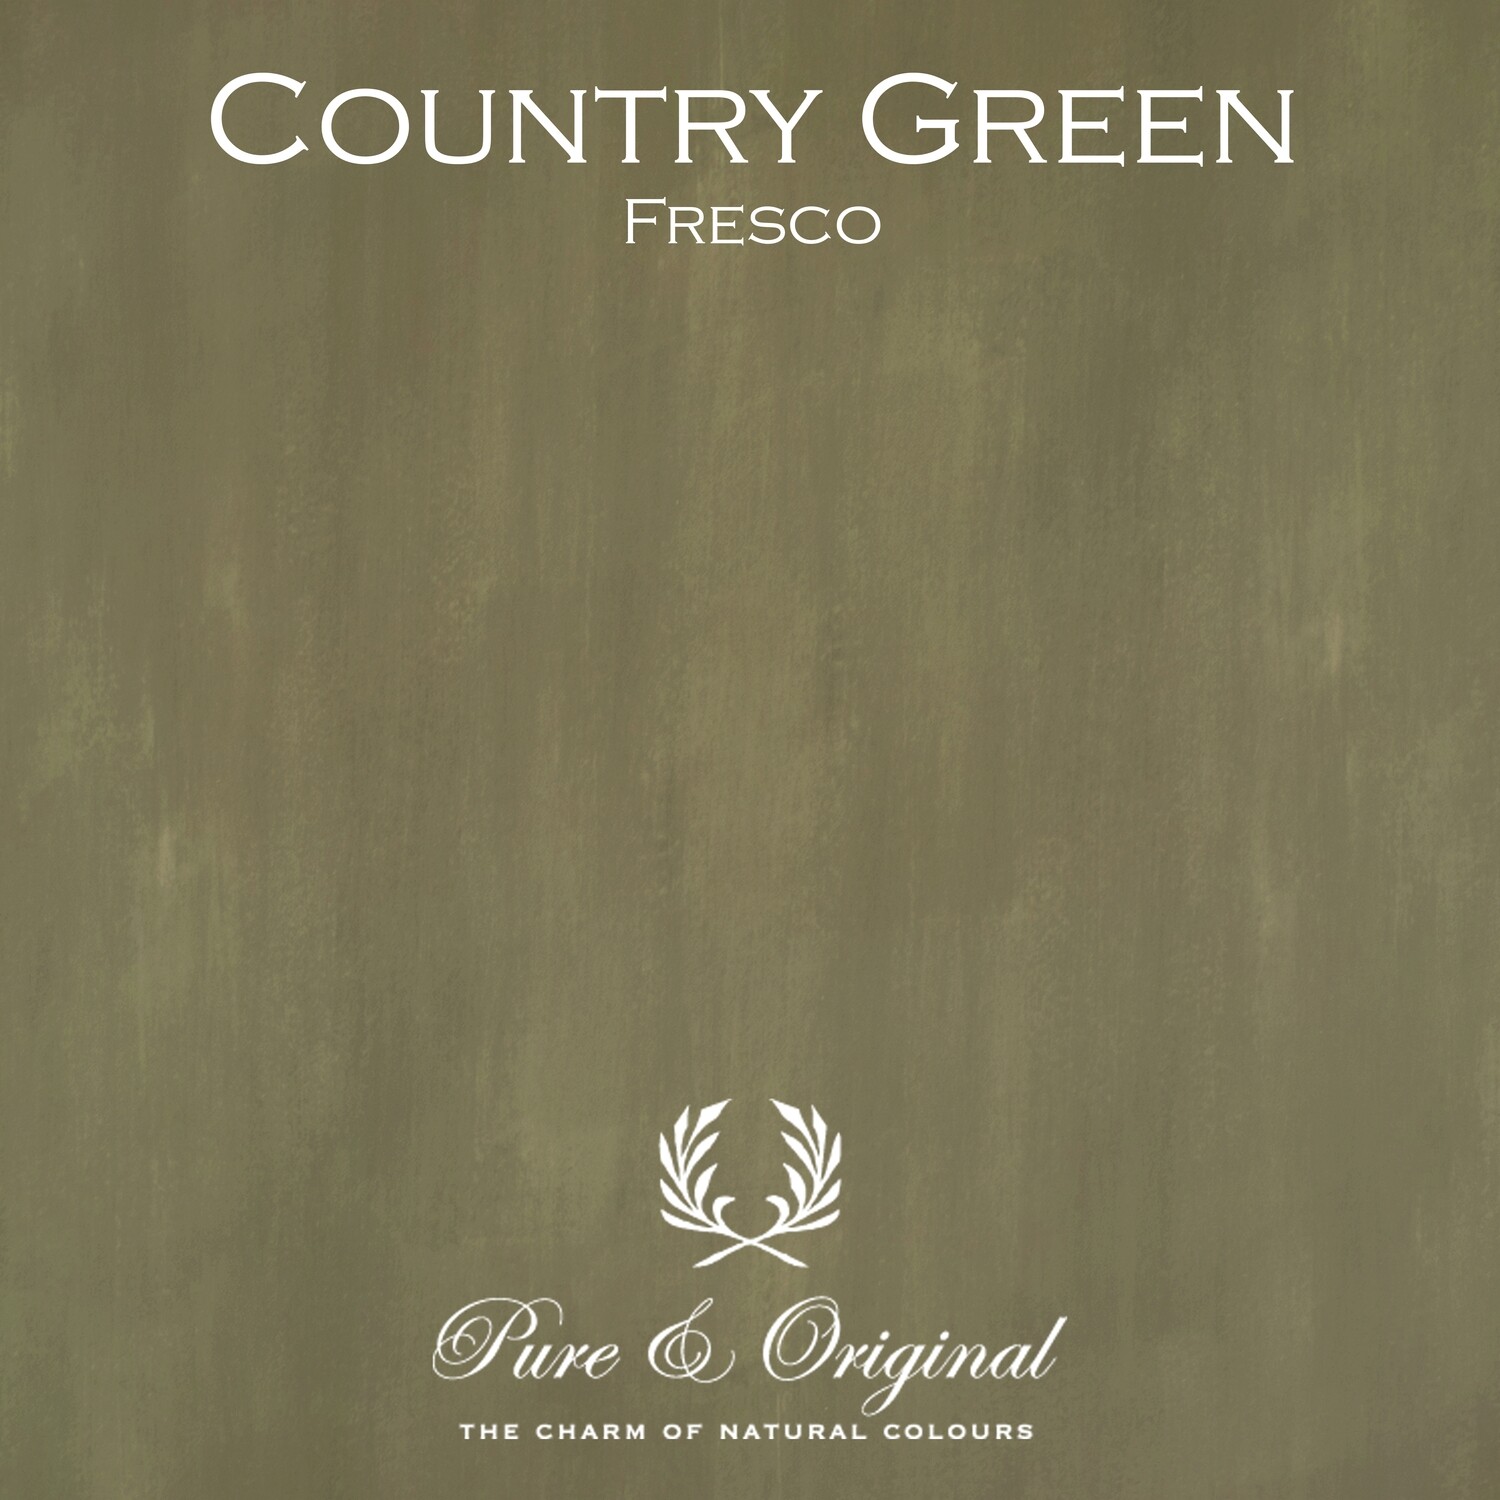 Country Green Fresco